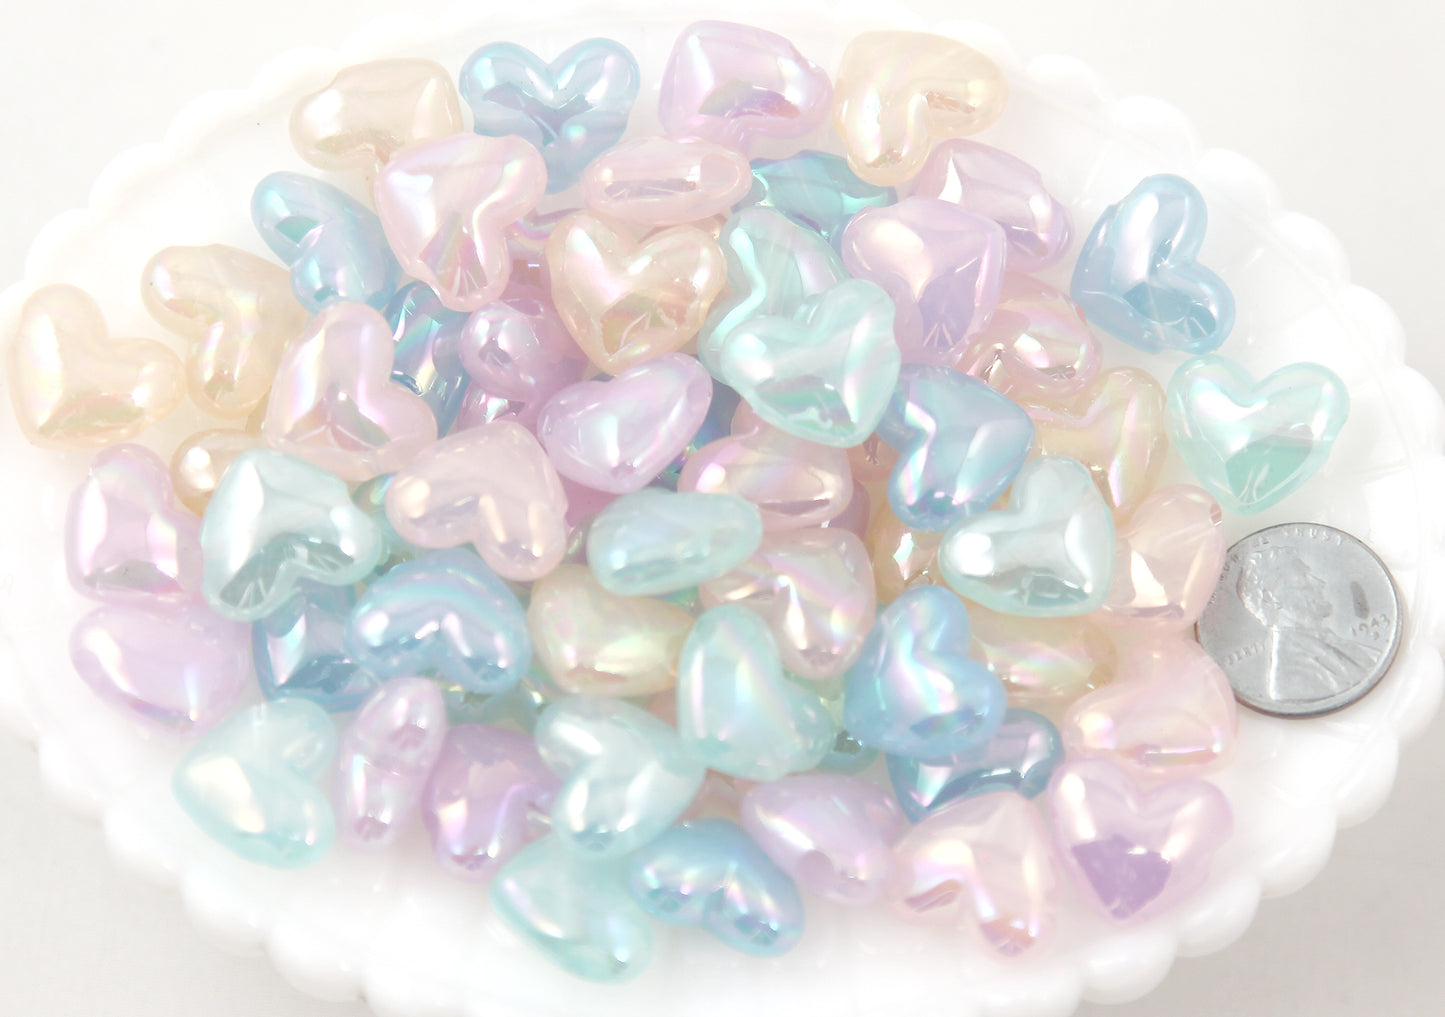 Pastel Heart Beads - 18mm Dreamy AB Iridescent Pastel Heart Bead Acrylic or Resin Beads - 30 pcs set